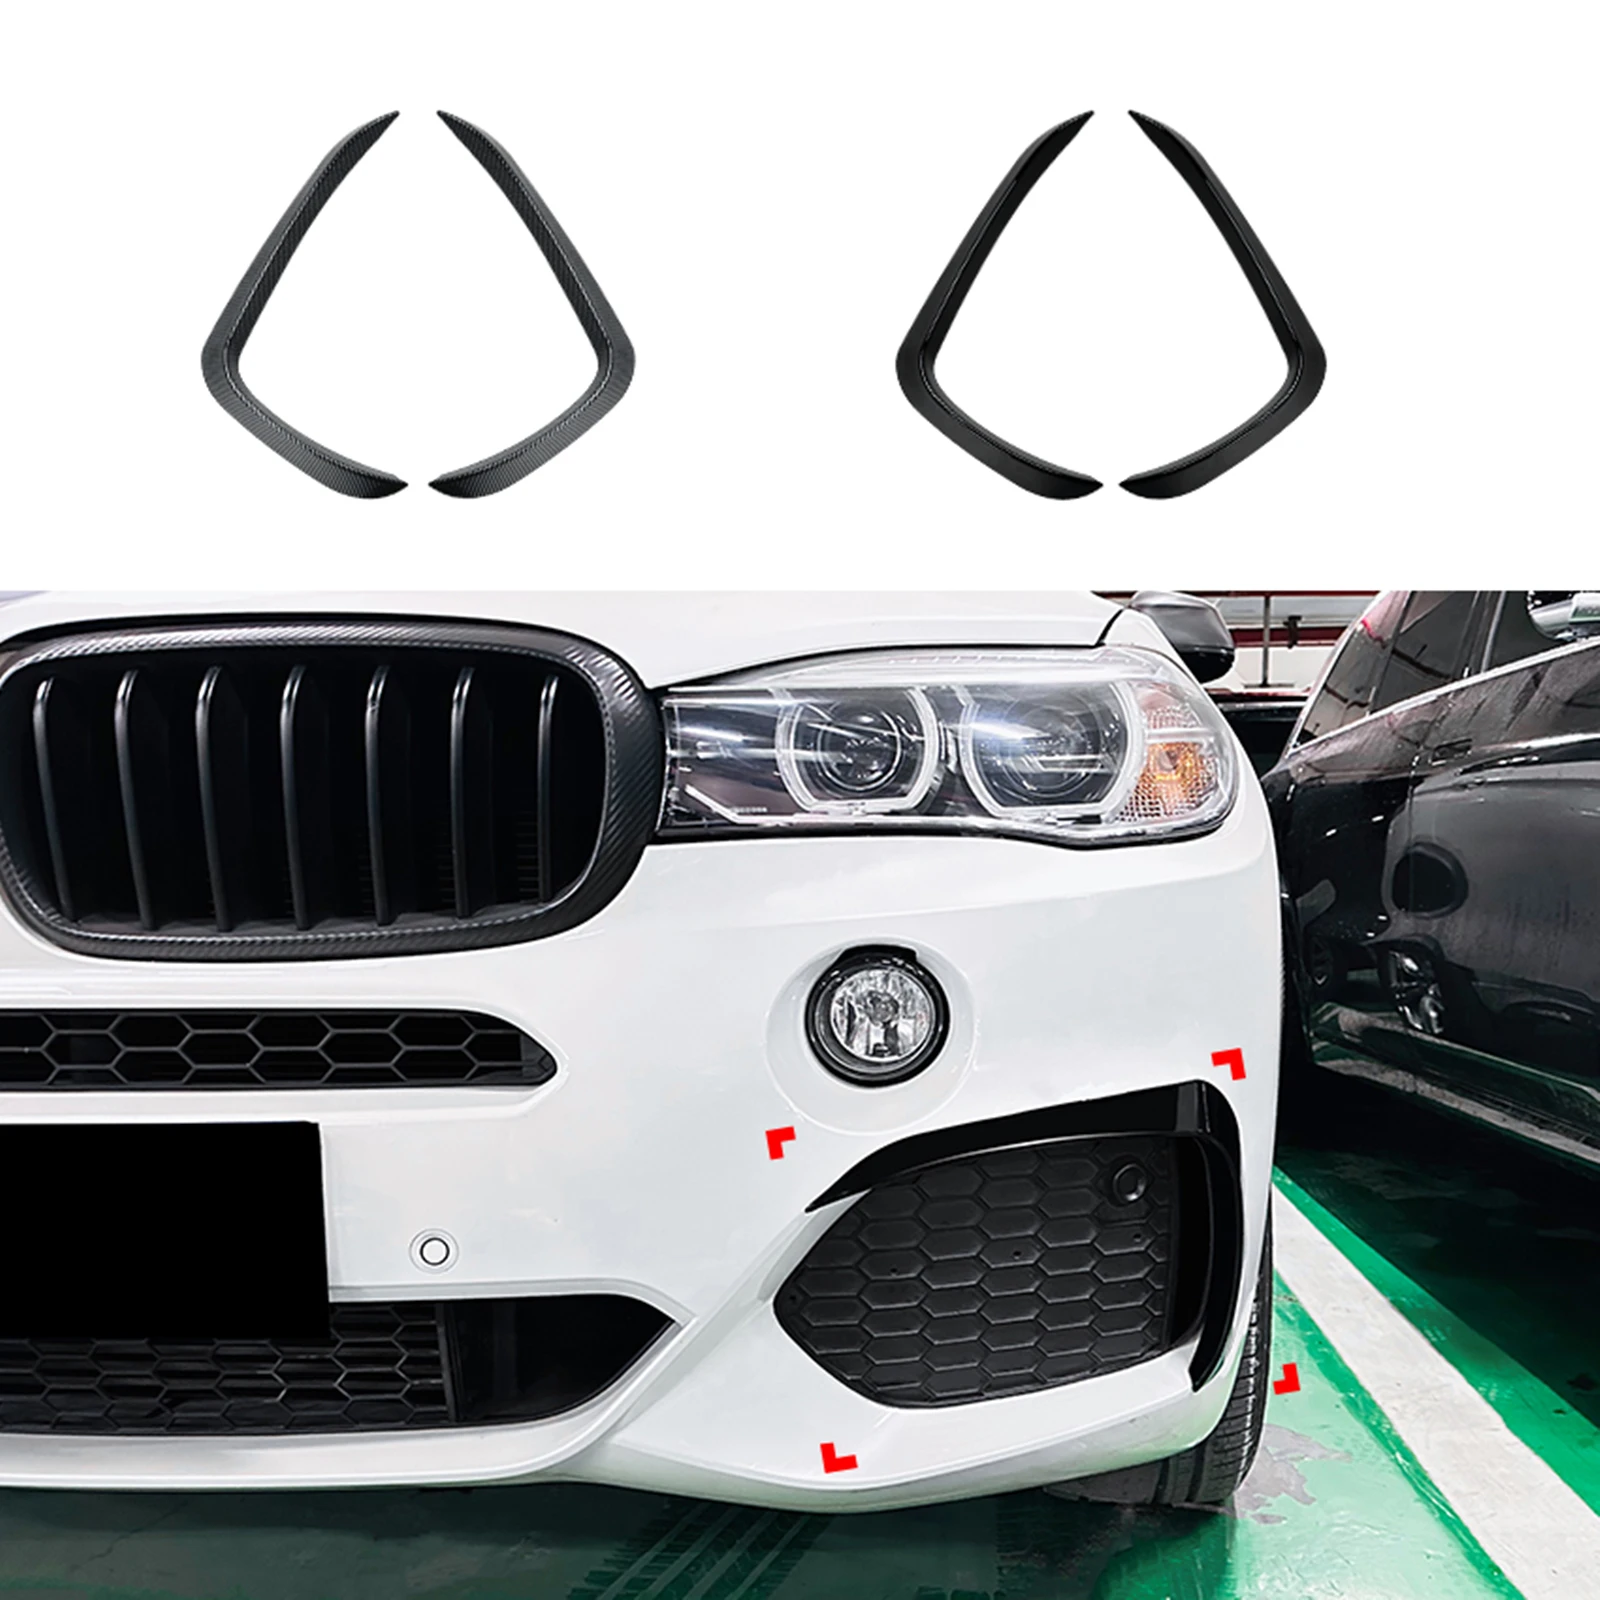 

Front Bumper Side Air Vent Canard Trim For BMW X5 F15 M Sport 2014-2018 Carbon Fiber Look/Gloss Black Intake Cover Frame Spoiler